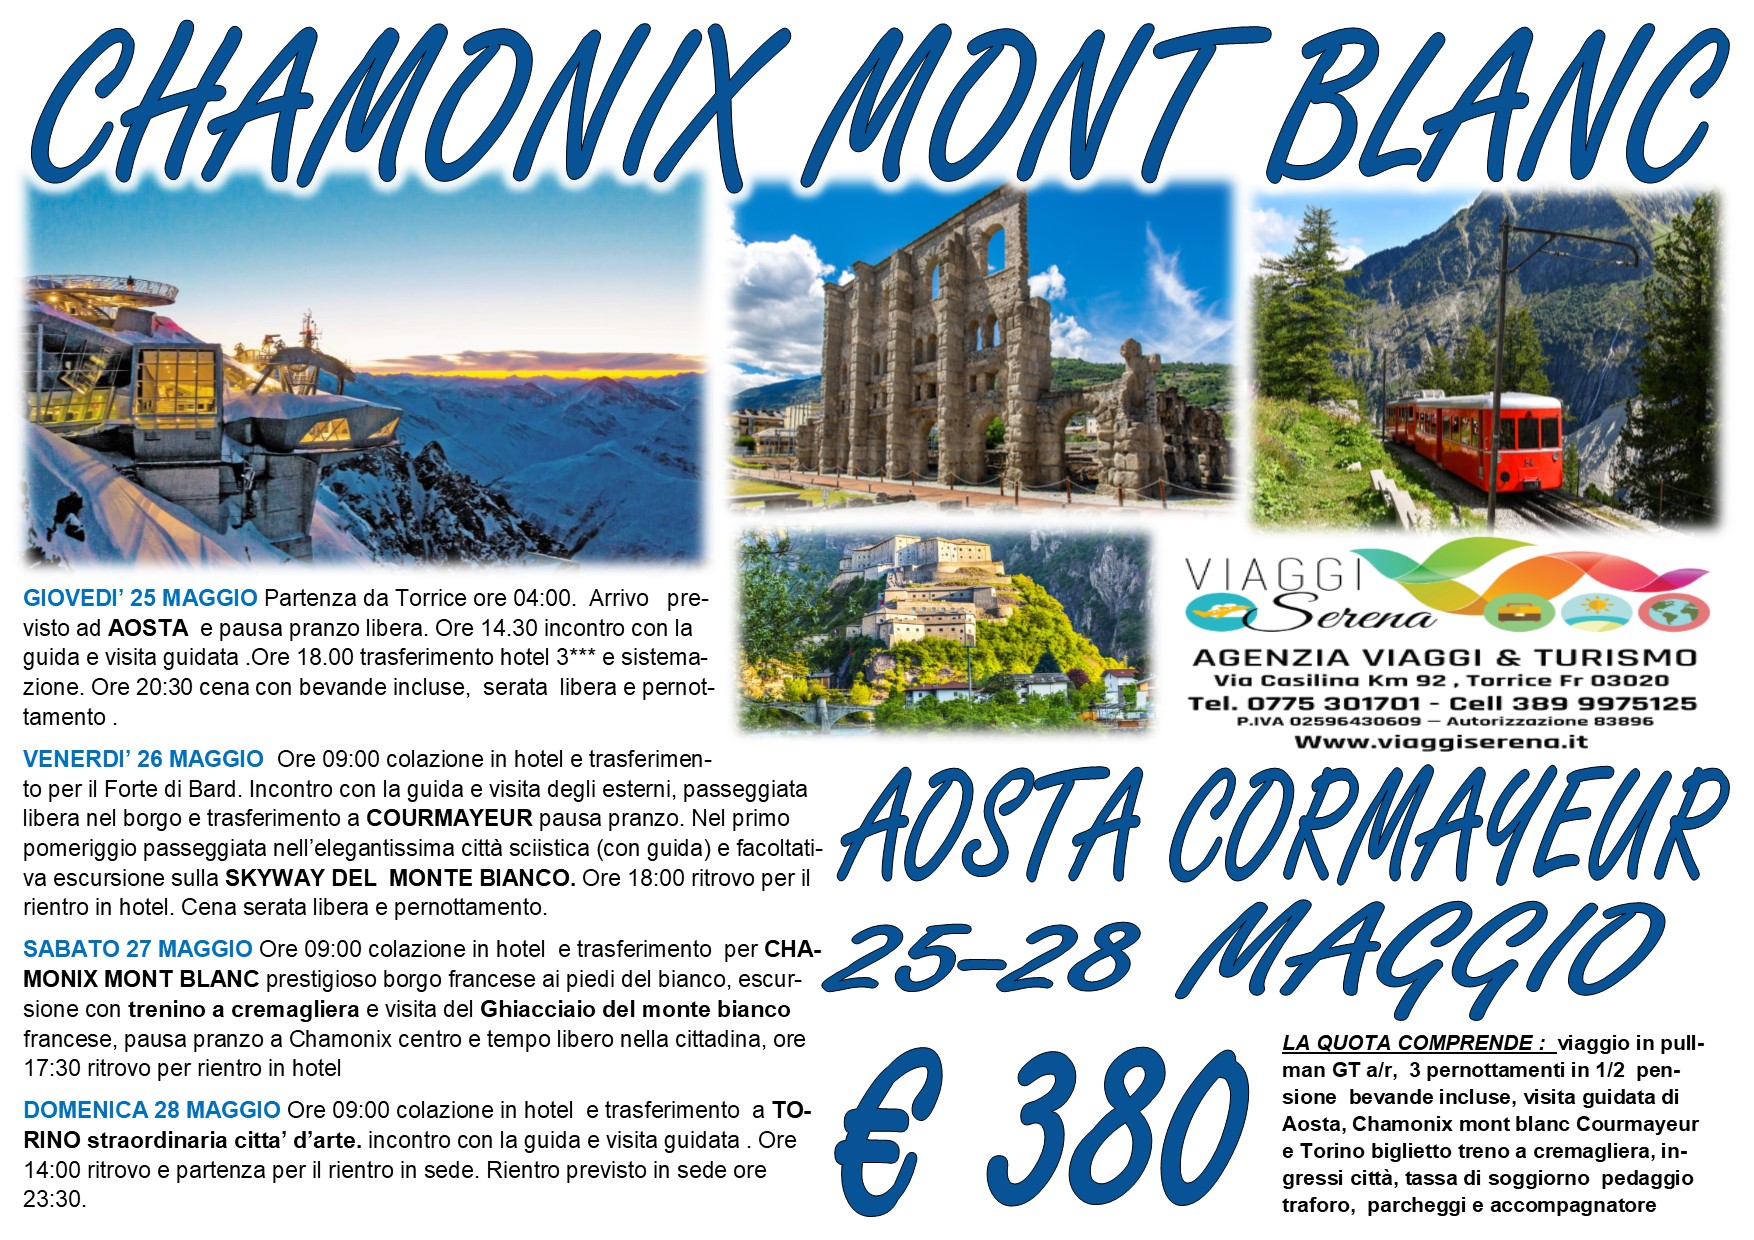 Viaggi di gruppo: Chamonix , Aosta, Torino, Courmayer & Monte Bianco 25-26-27-28 Maggio €380,00